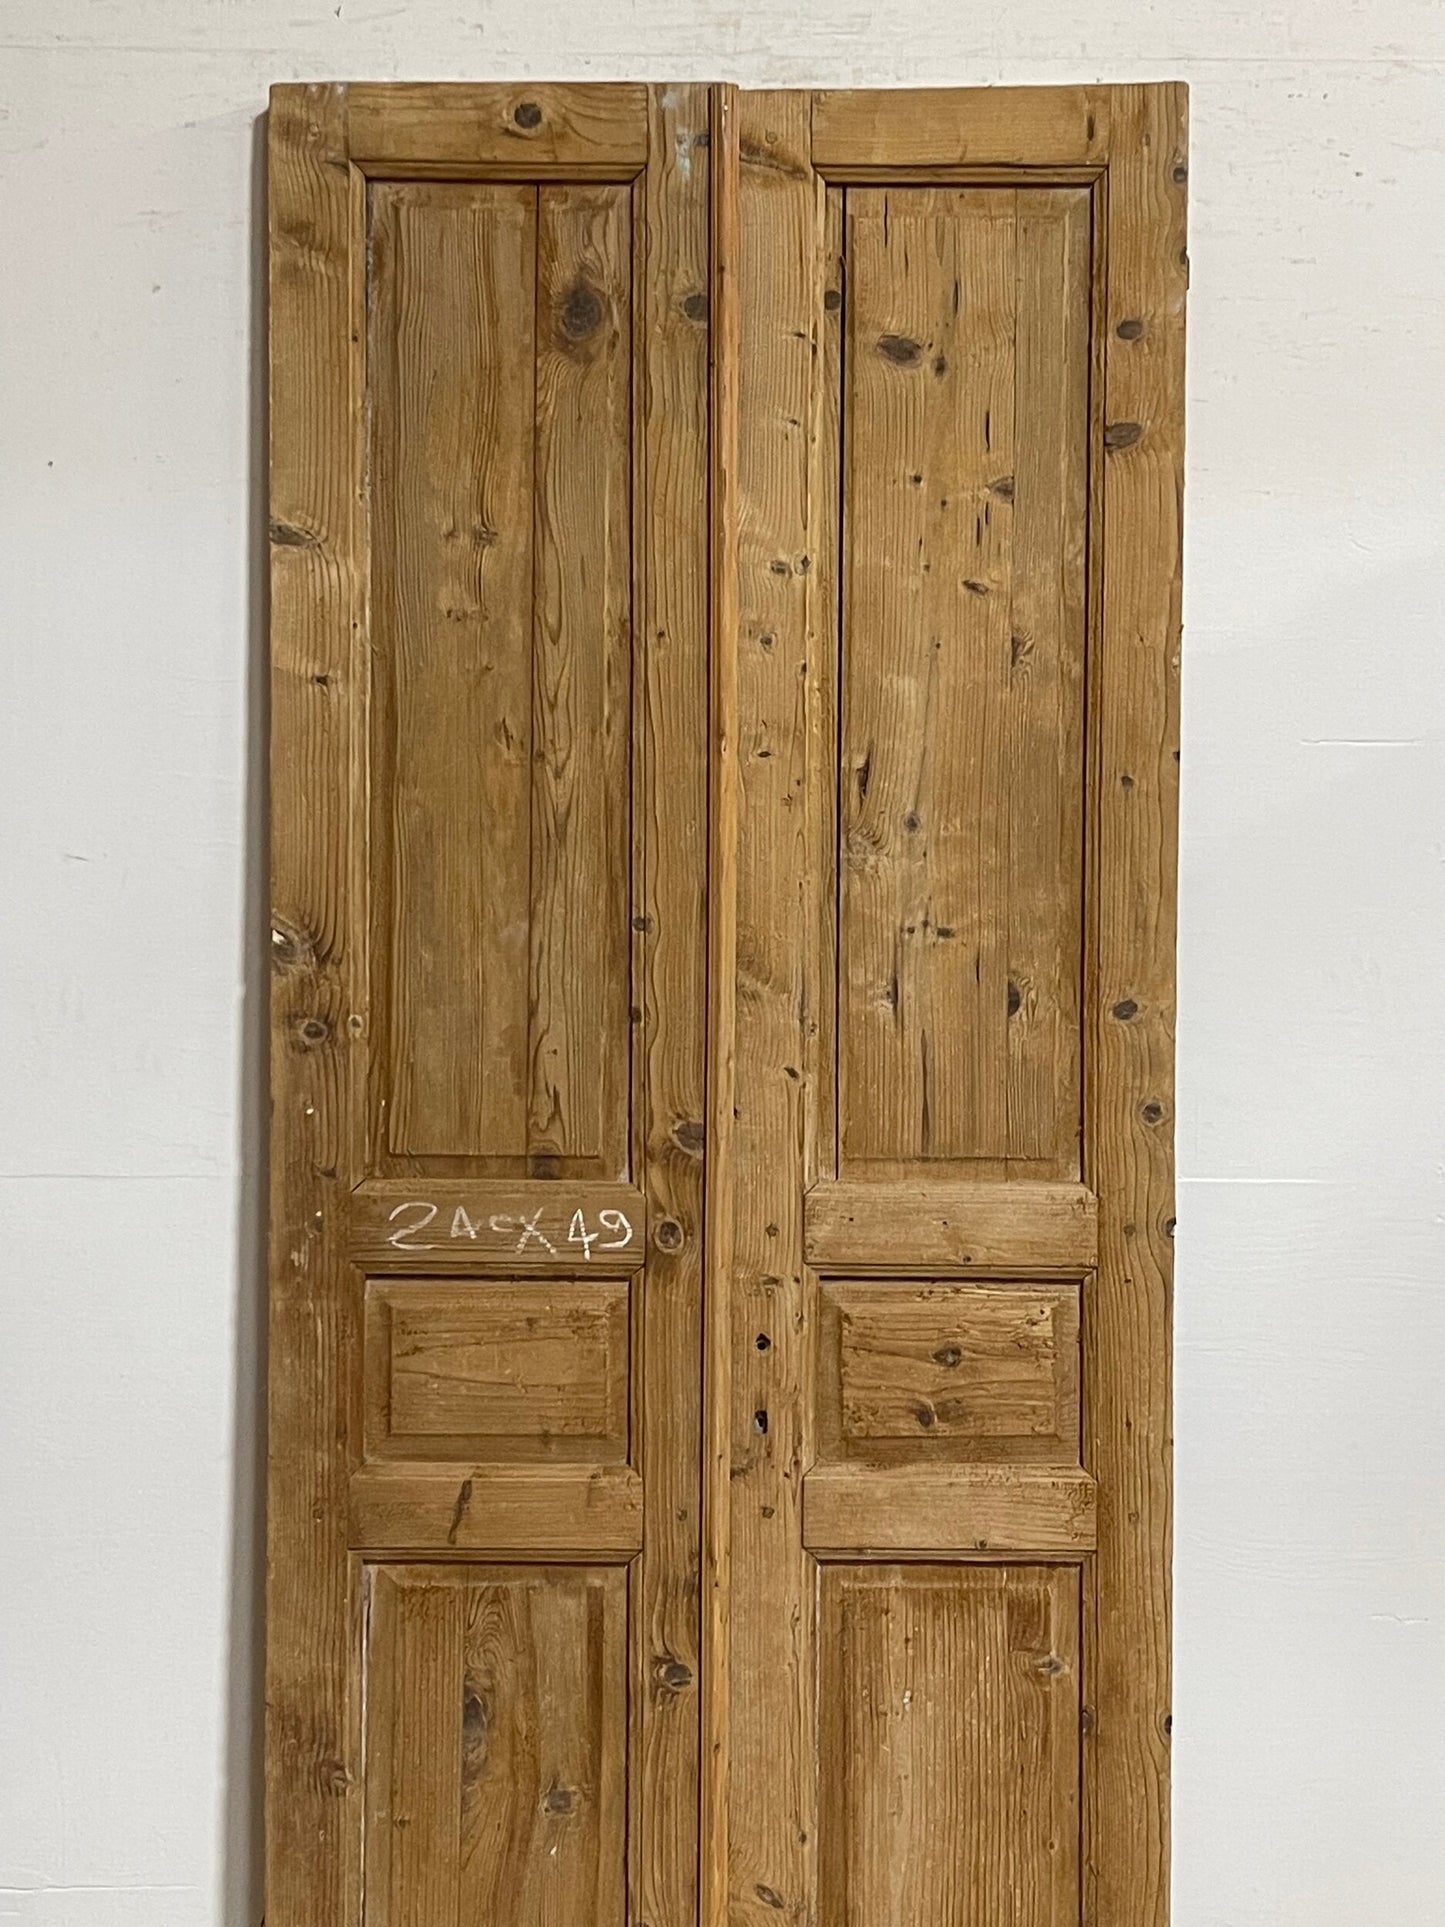 Antique French doors (94.5x38.5) H0154s